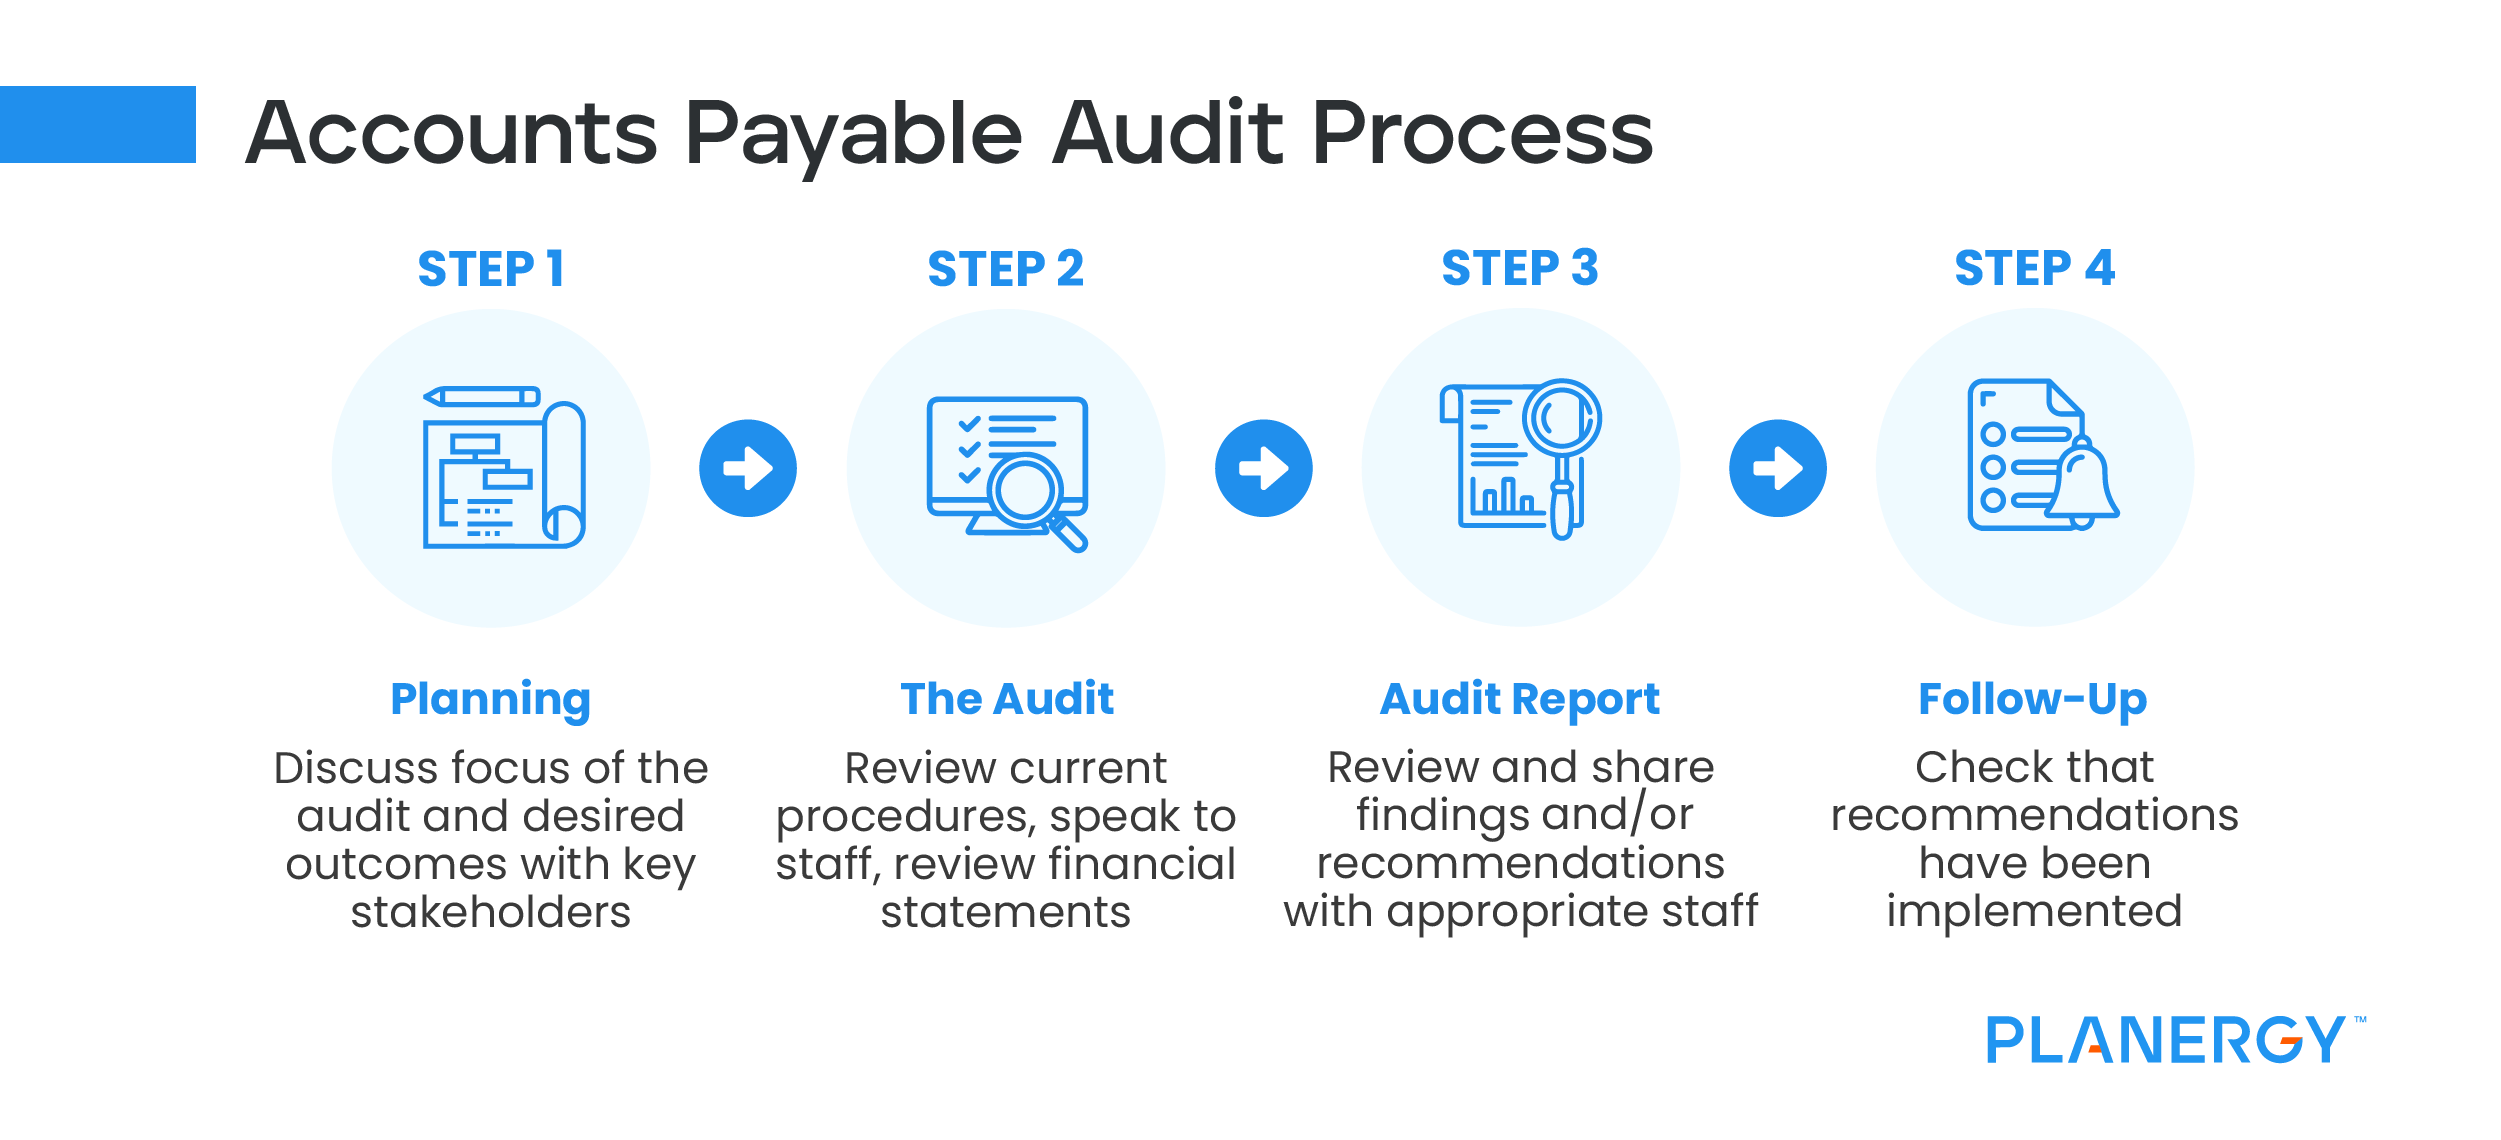 Accounts Payable Audit Process